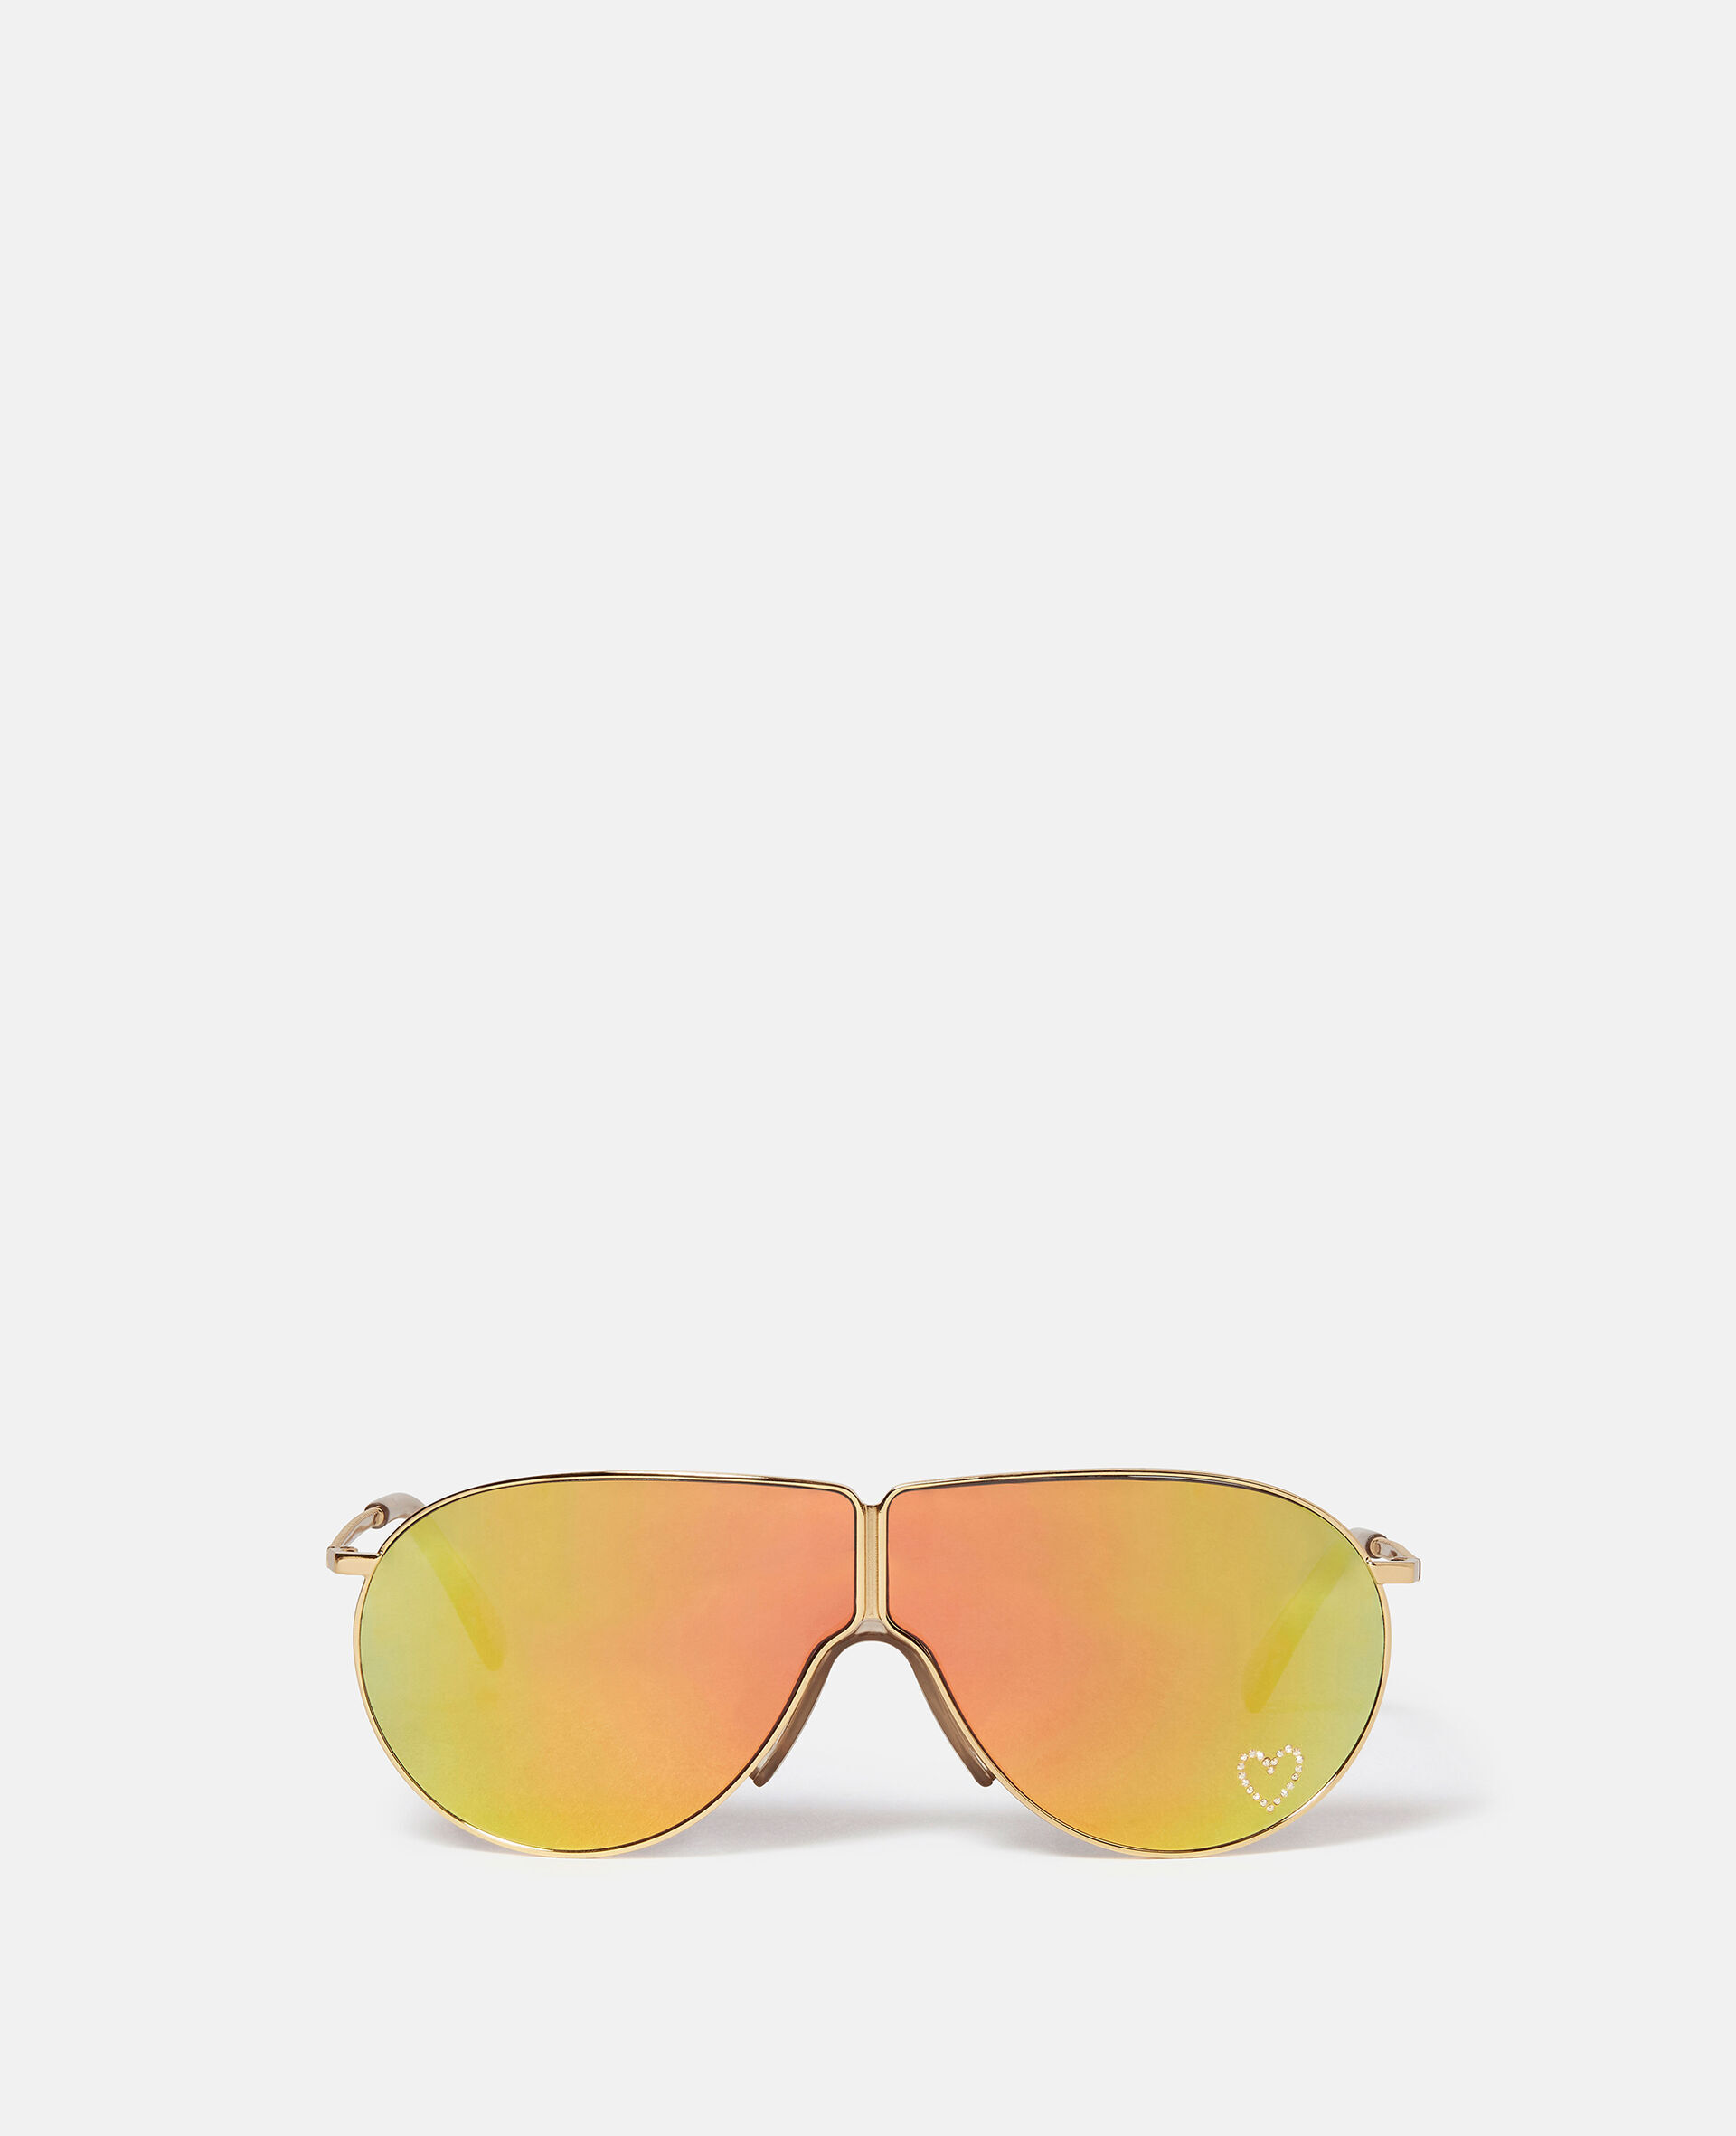 Loveheart Metal Aviator Sunglasses-Multicolour-large image number 0